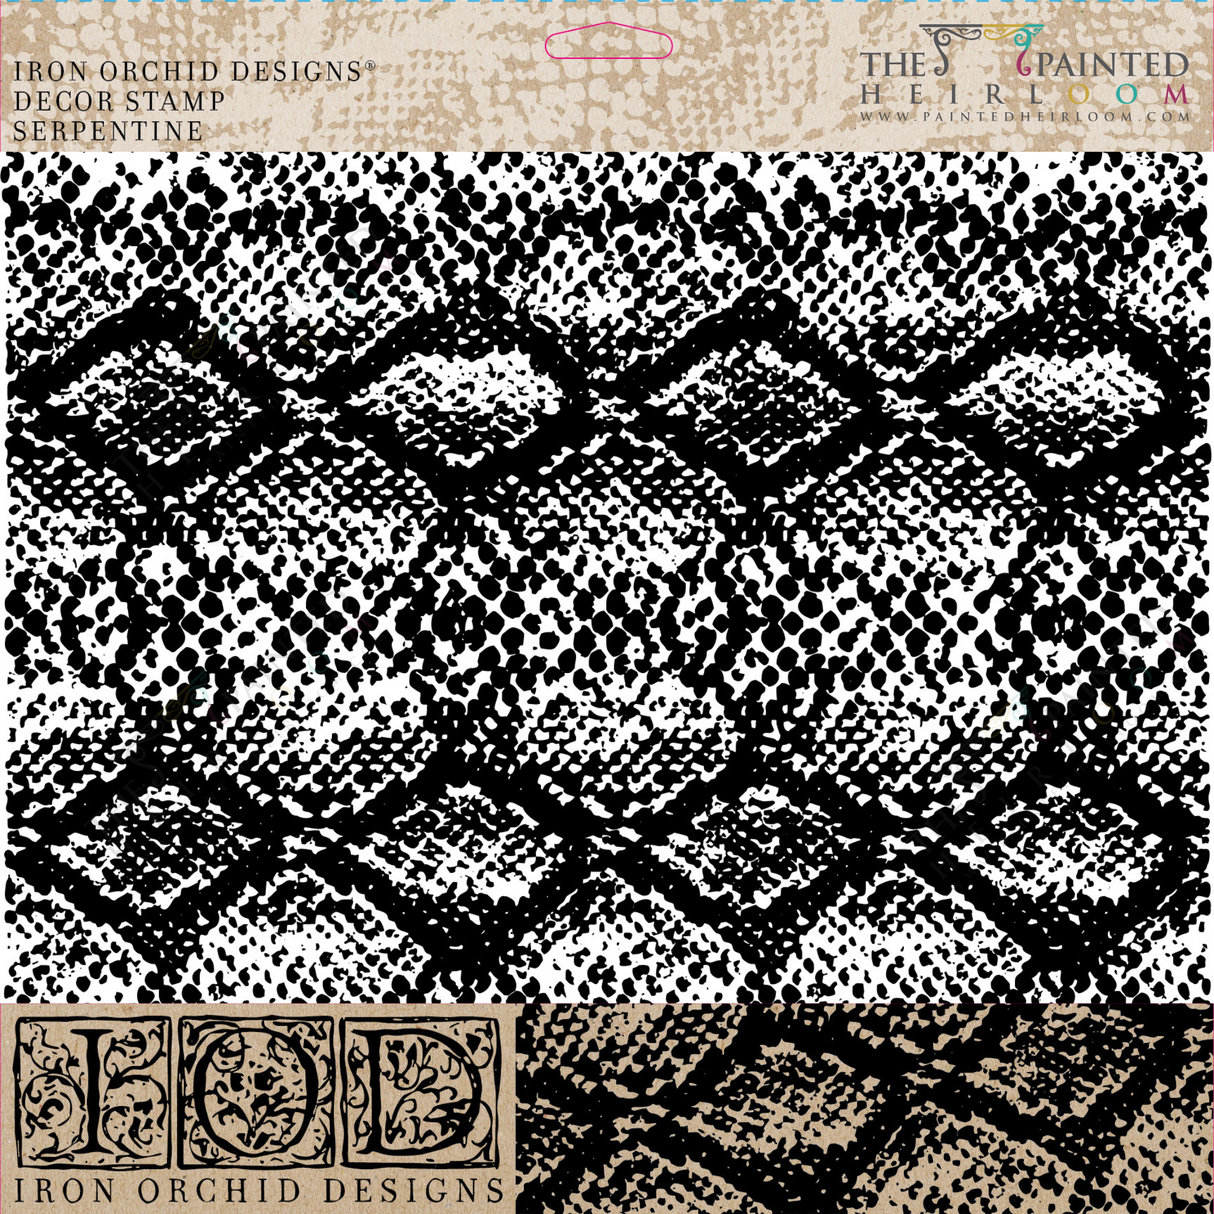 Serpentine Stamp by IOD - Iron Orchid Designs